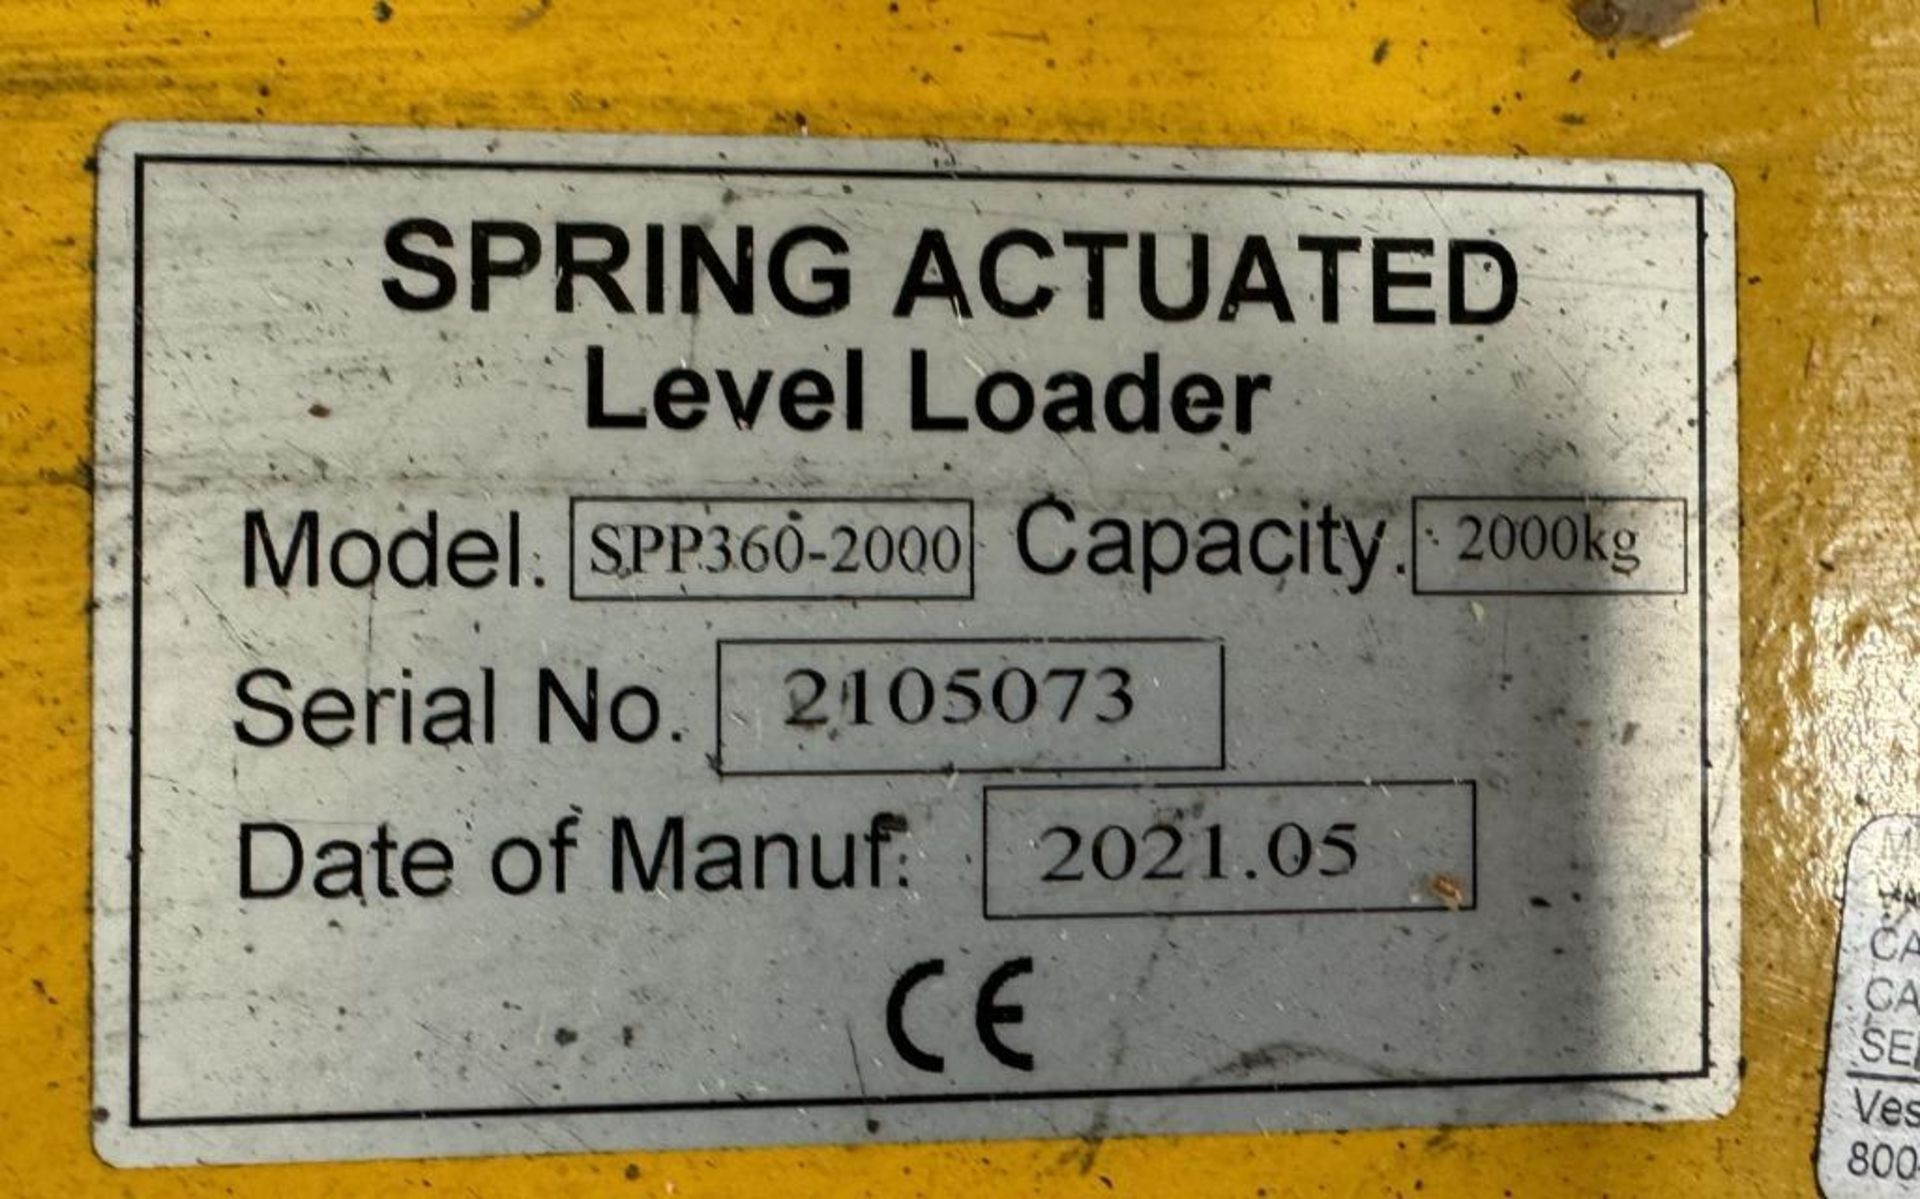 Nu-Lift Spring Actuated Pallet Leveler, Model SPP360-2000, Serial# 2105073, Built 2021. - Image 4 of 4